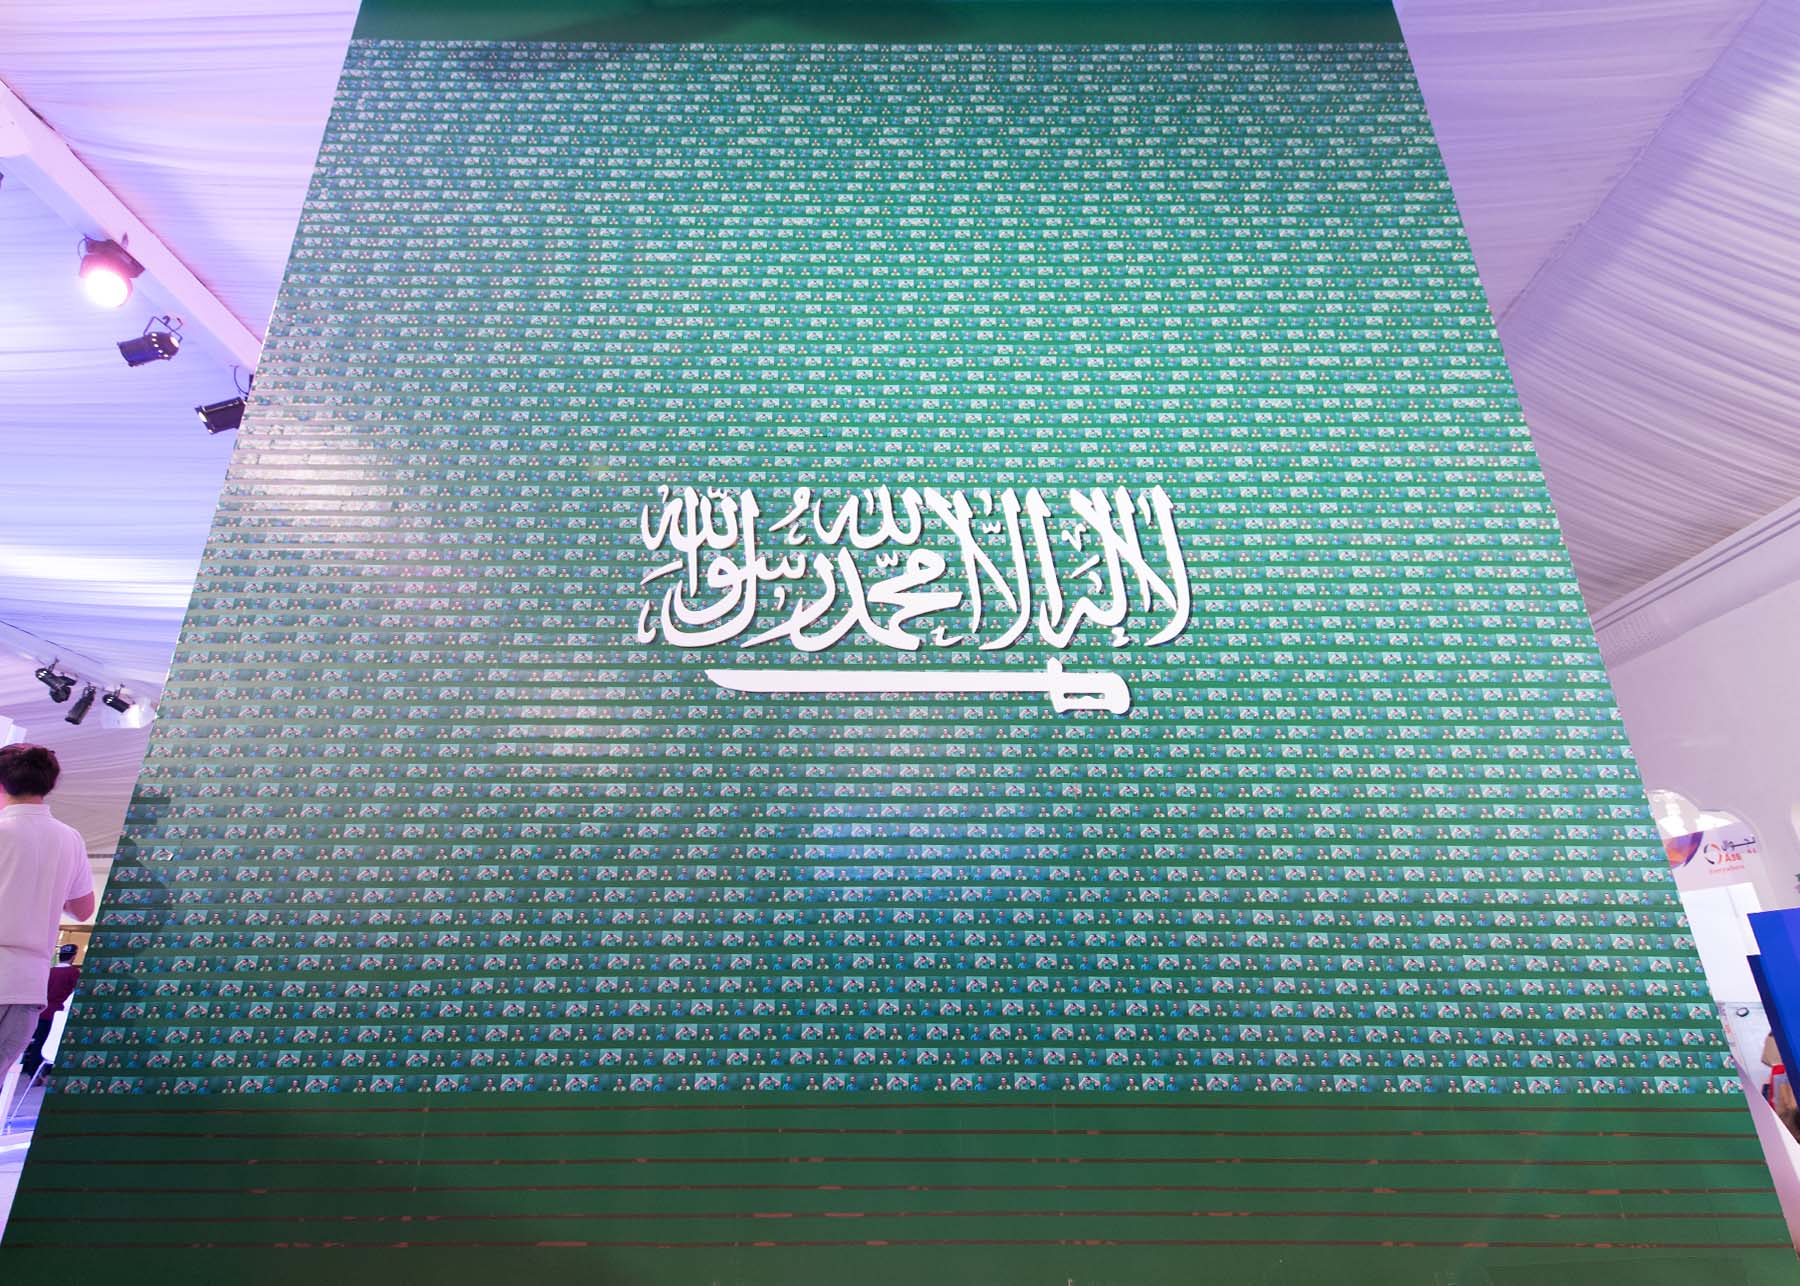 Saudi flag printed by photos from HP Sprocket printer